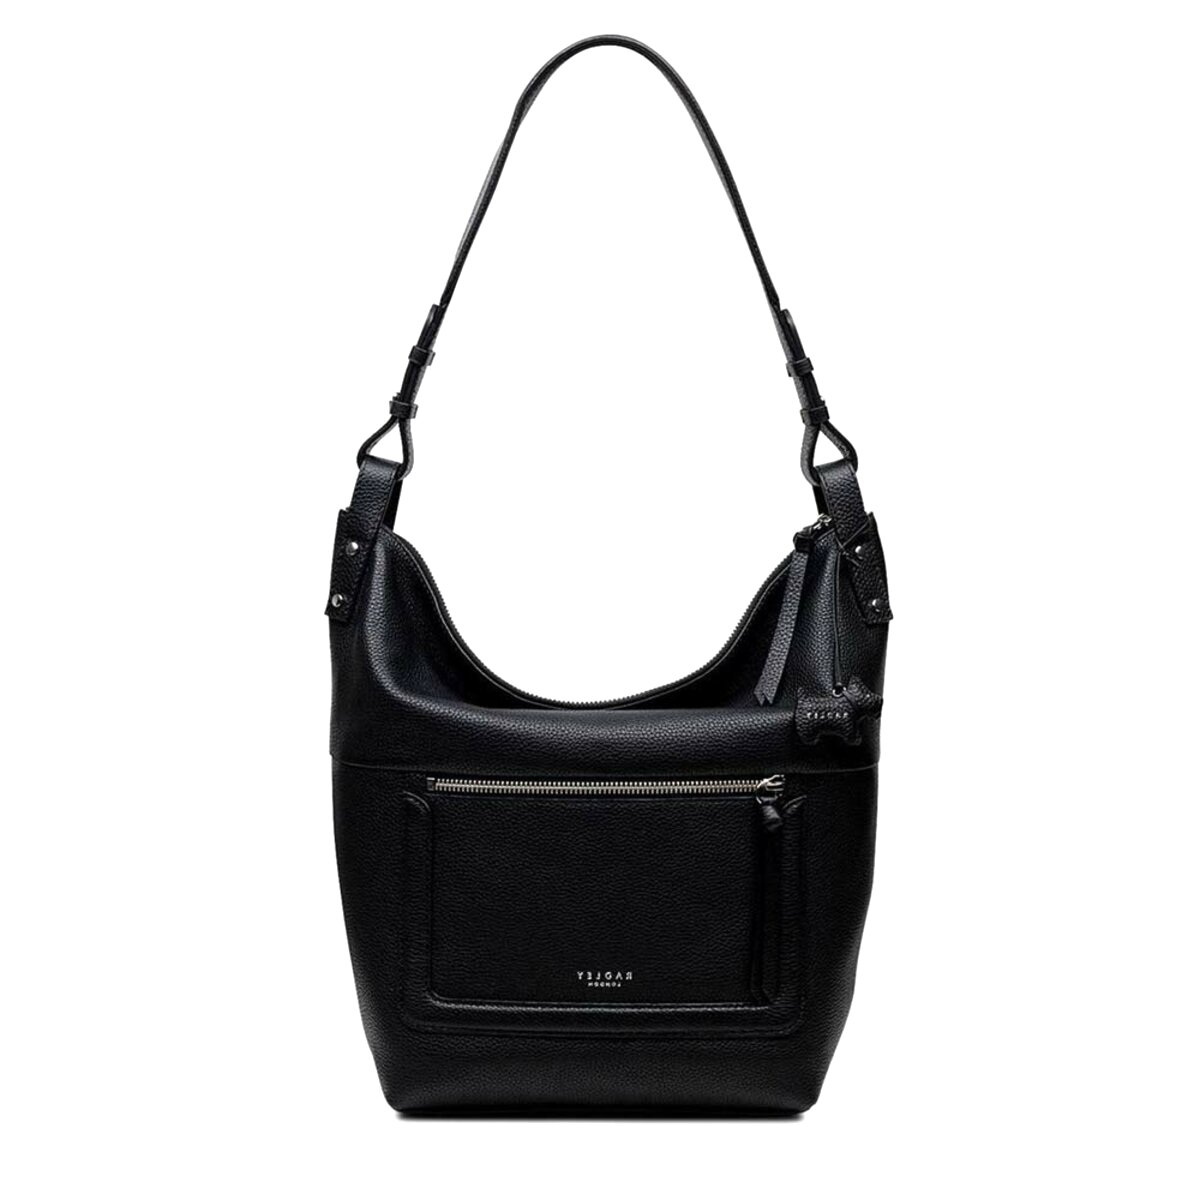 Black Radley Hobo Bag for sale in UK | View 26 bargains